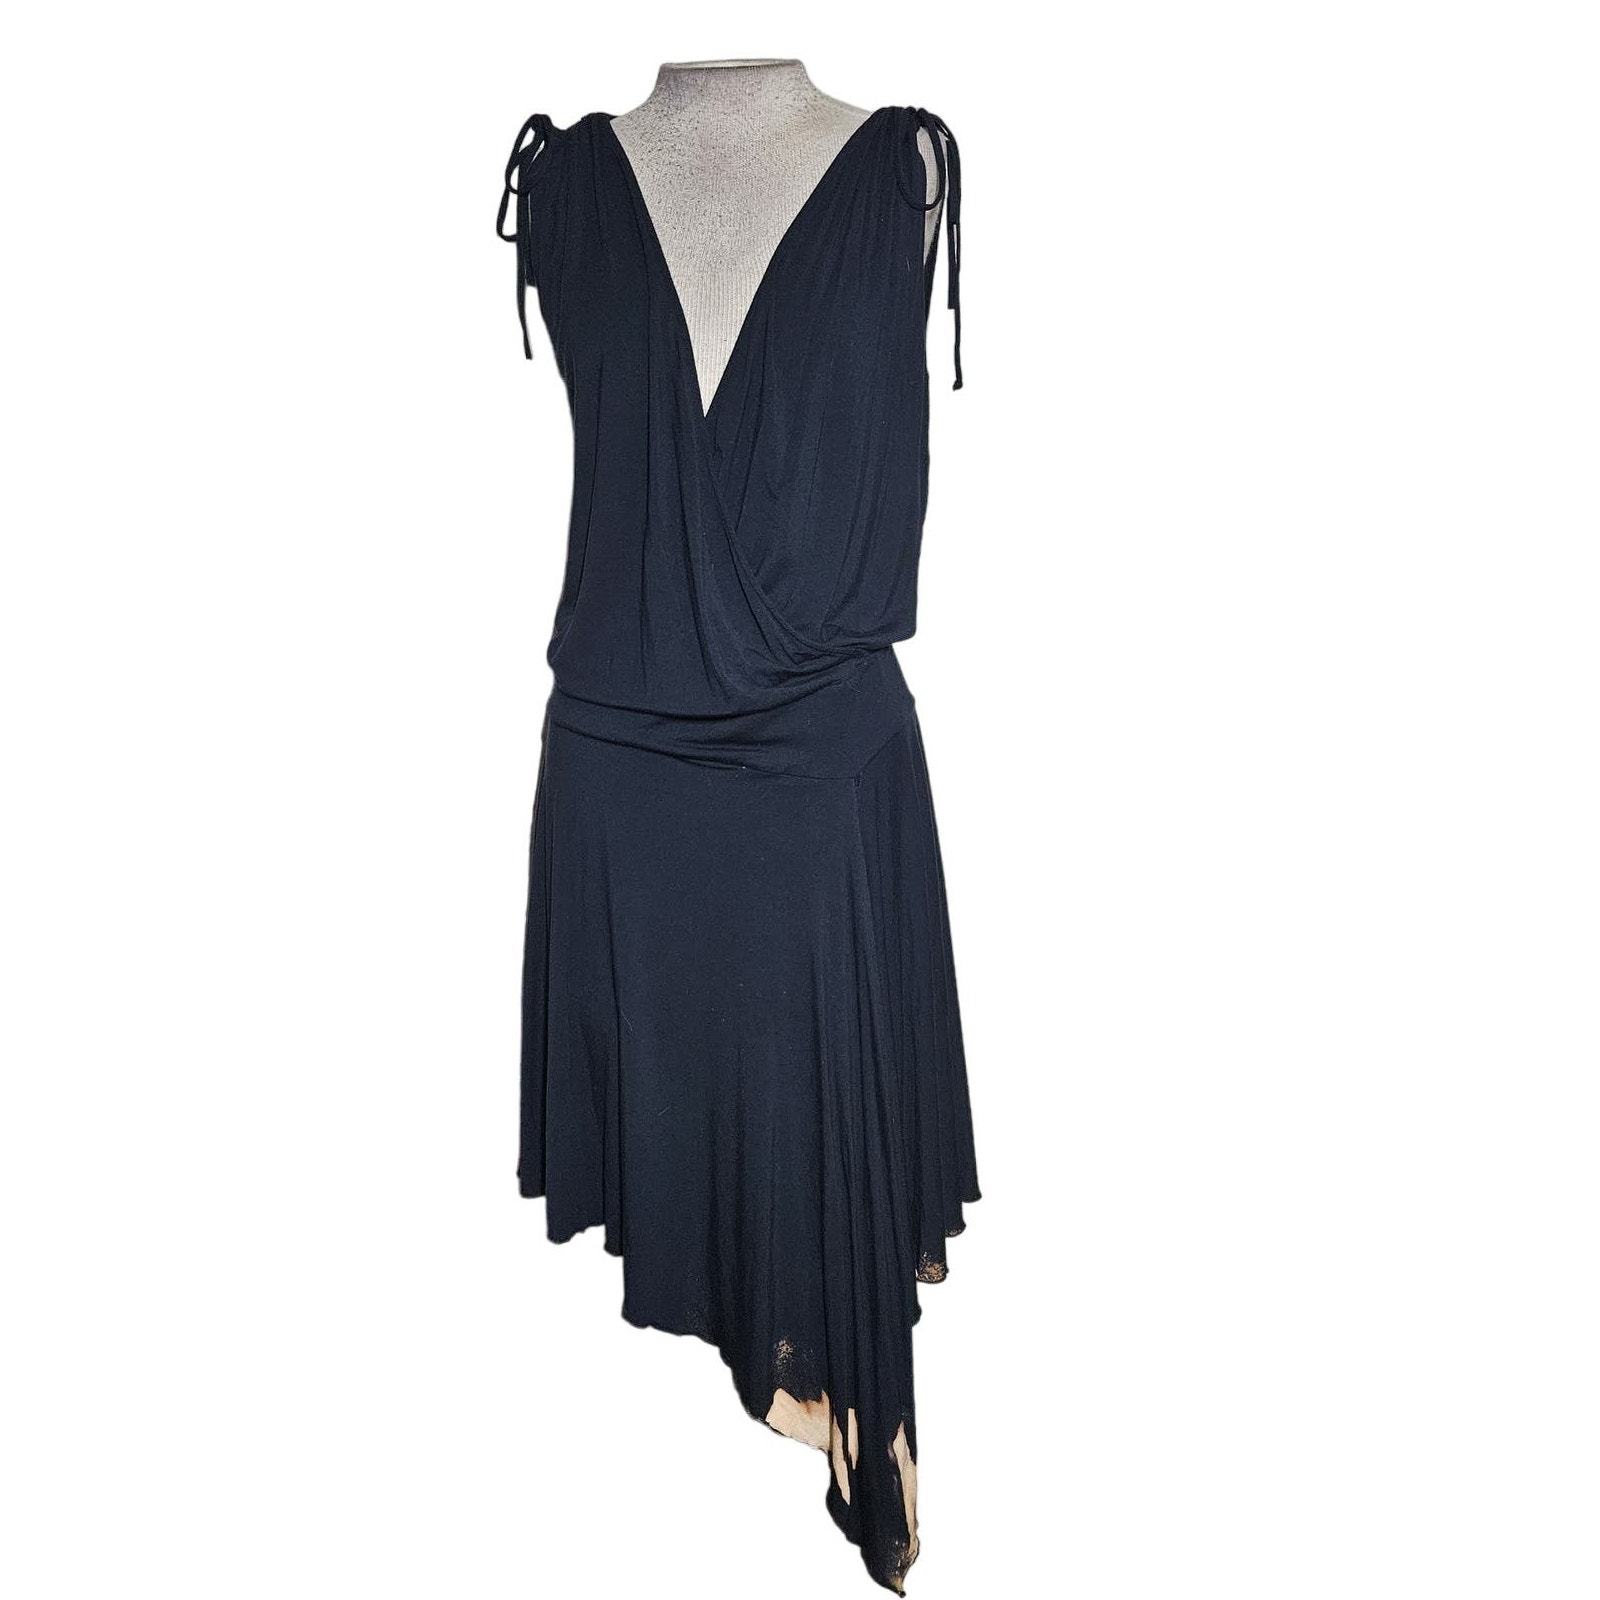 Primary image for Black Sleeveless Dress Size 12